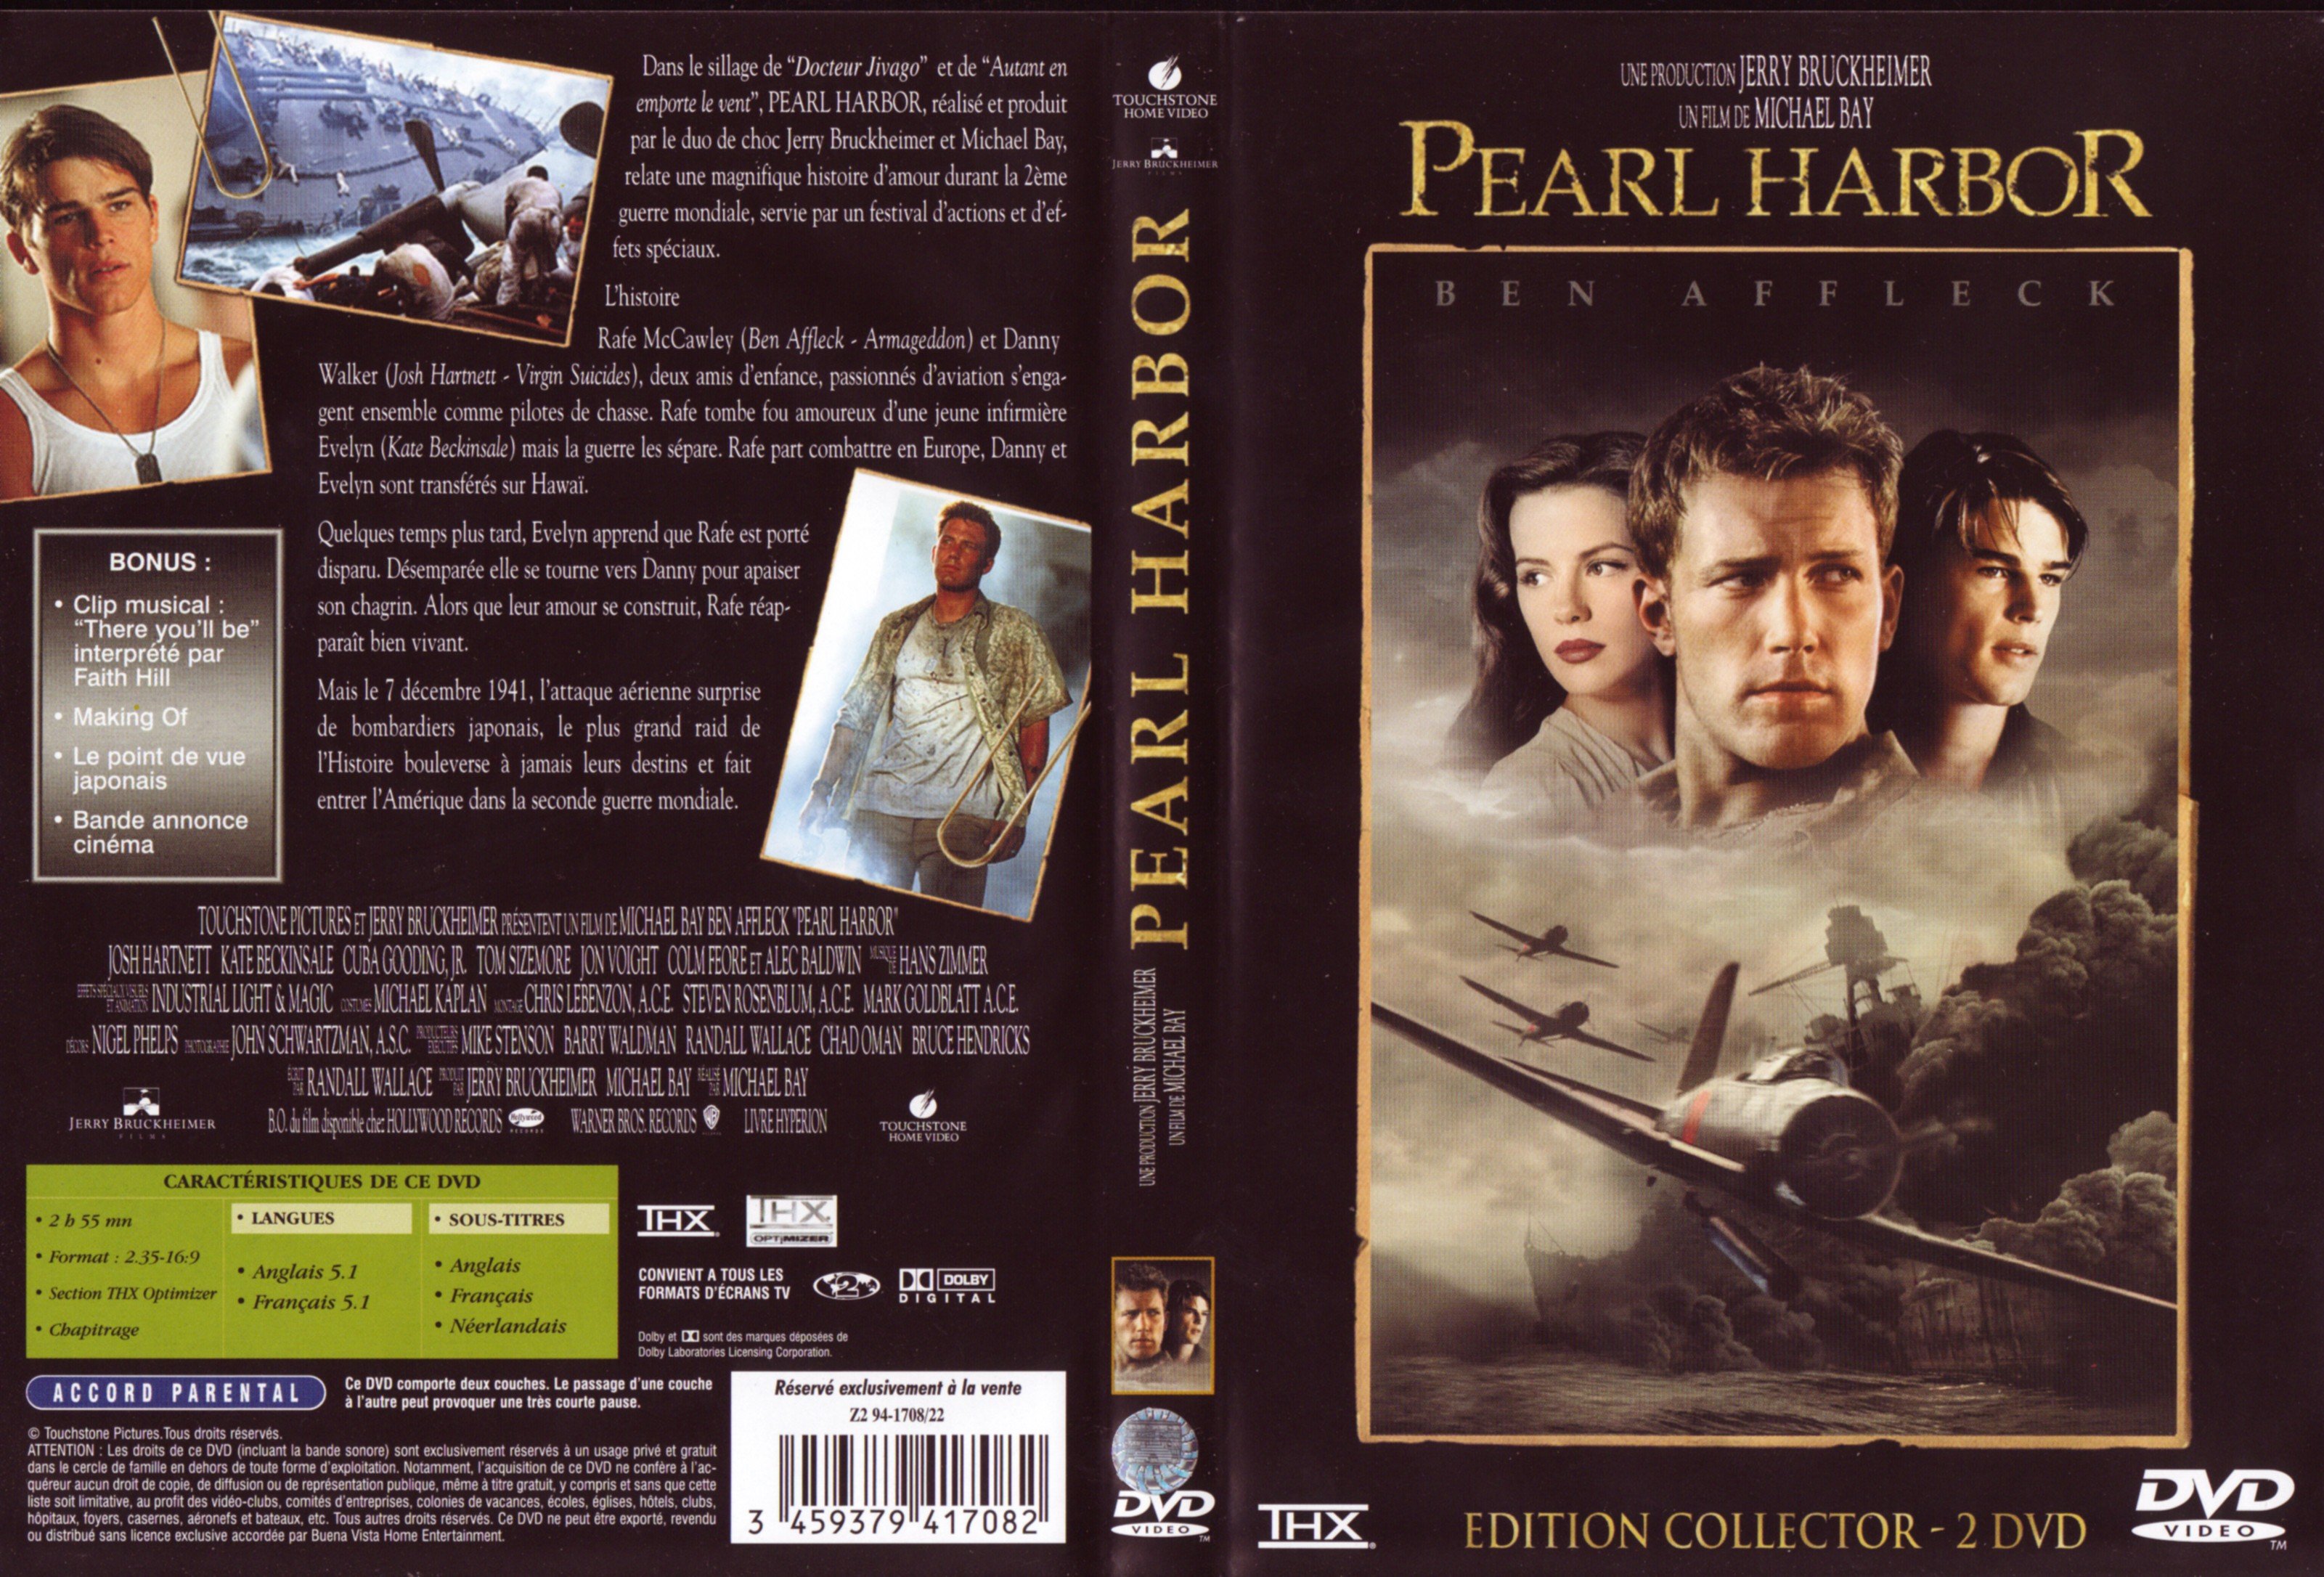 Jaquette DVD Pearl Harbor v2